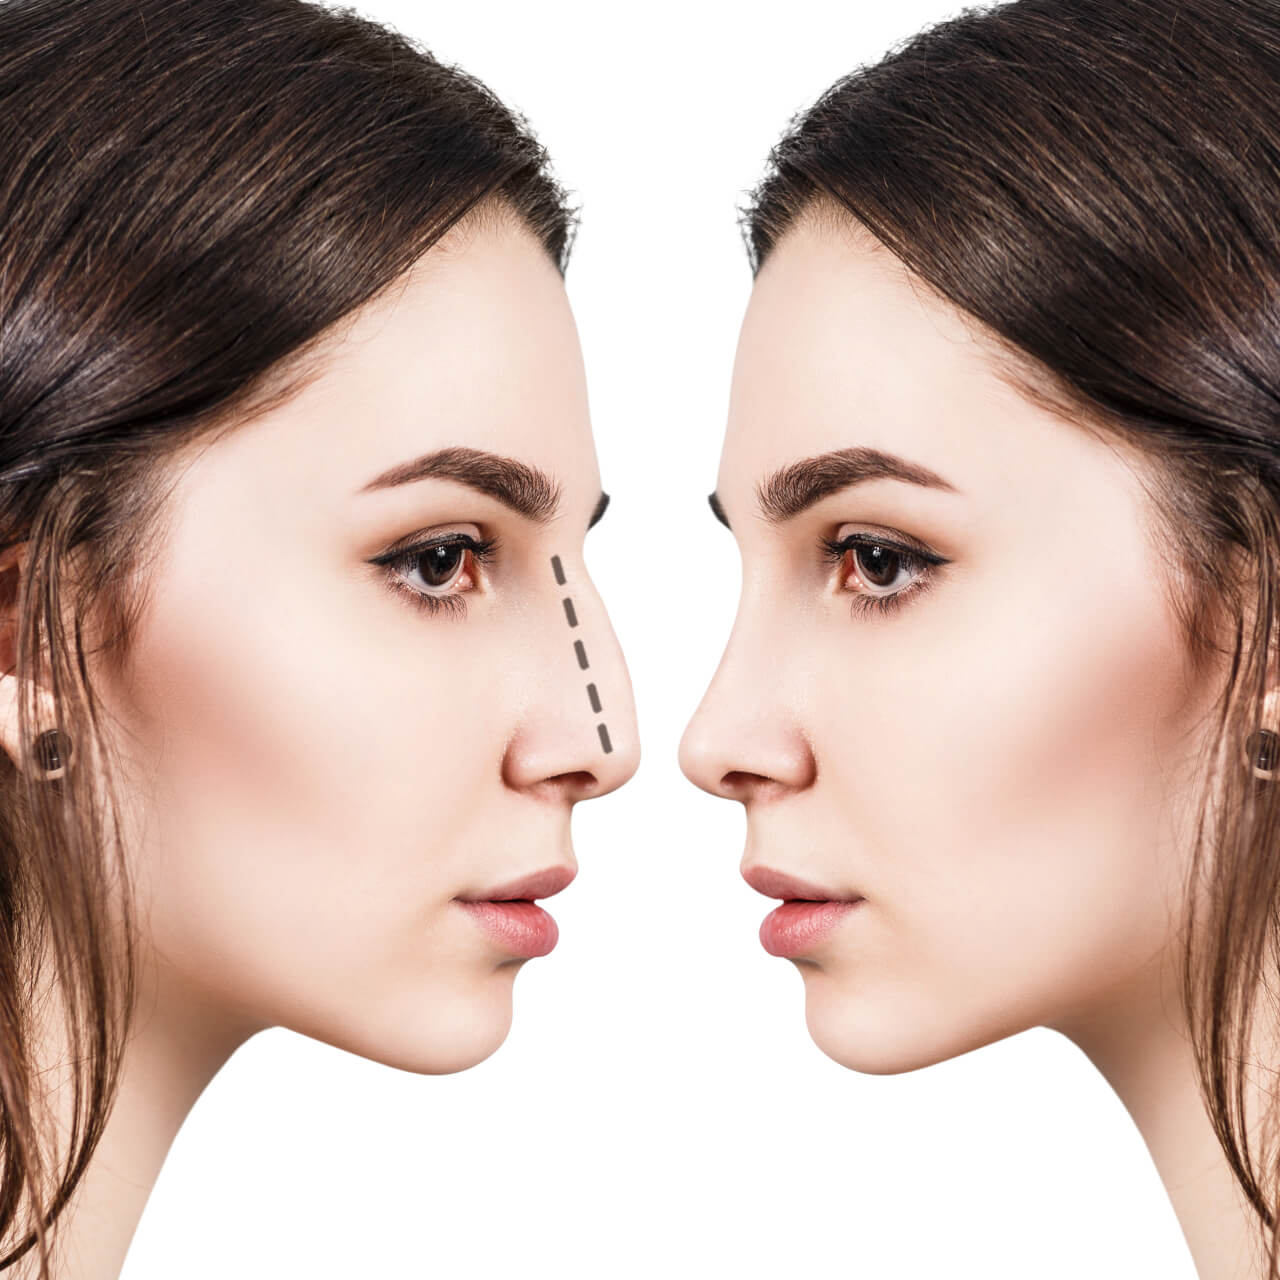 nose job transformations